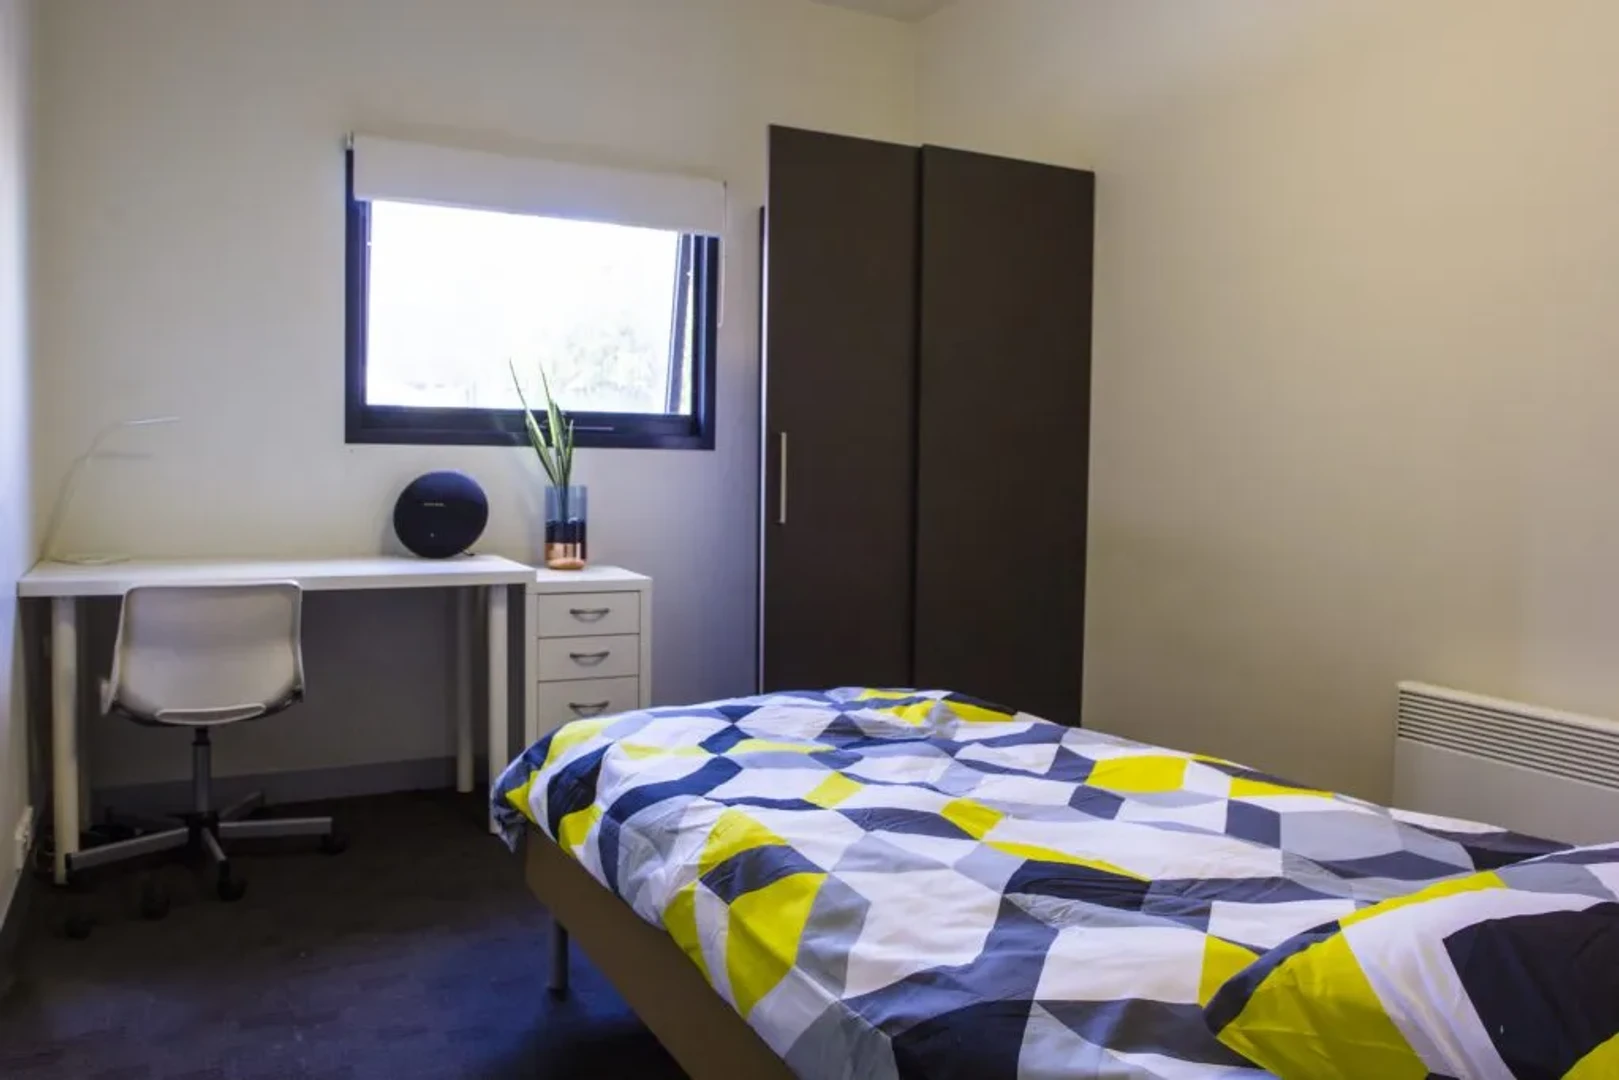 Shared room in 3-bedroom flat Melbourne